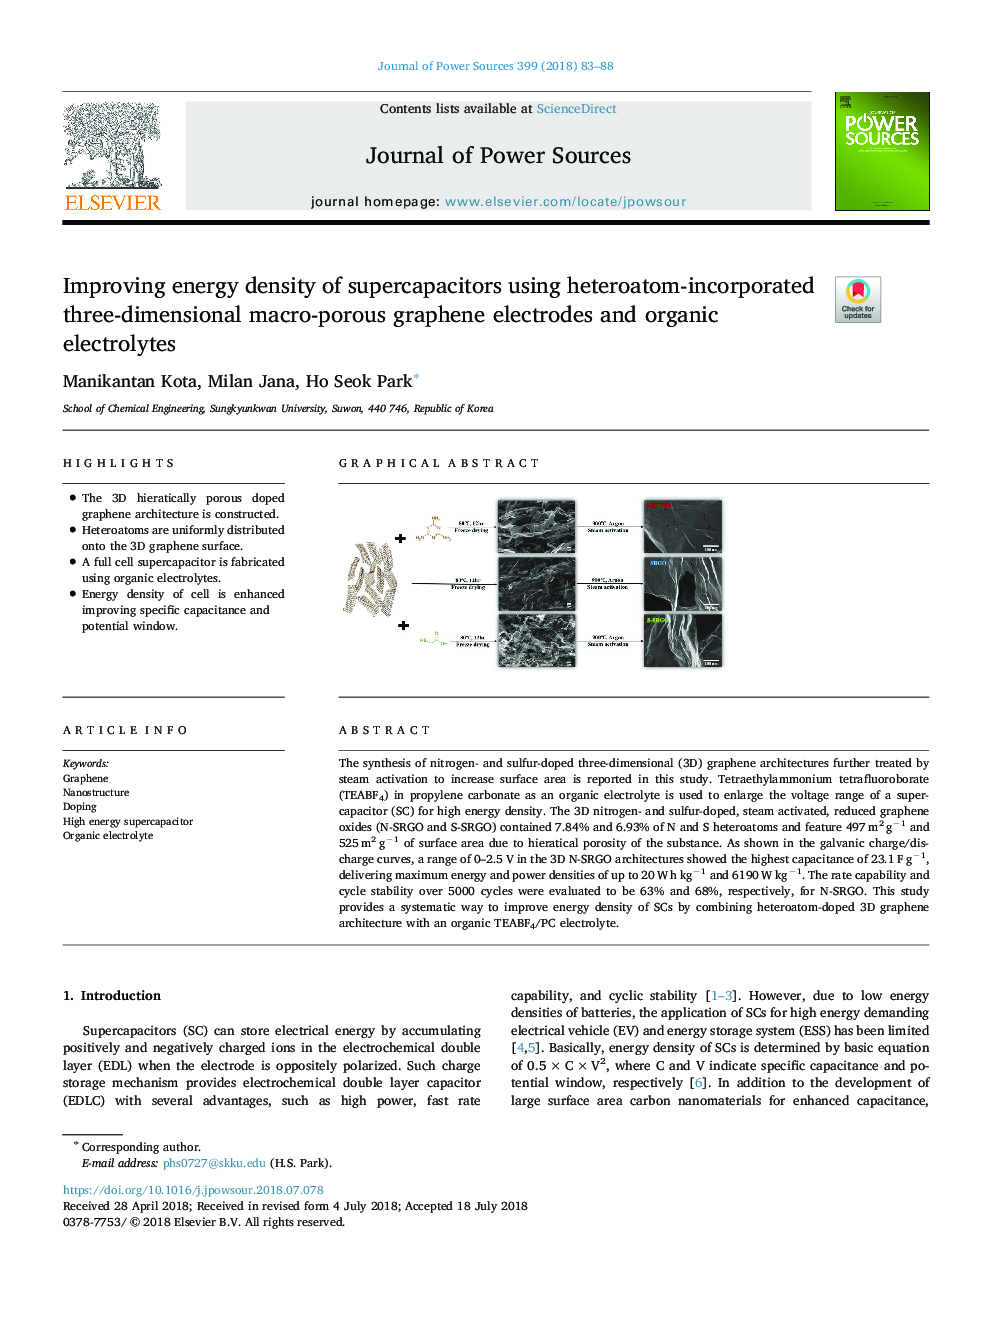 Improving energy density of supercapacitors using heteroatom-incorporated three-dimensional macro-porous graphene electrodes and organic electrolytes